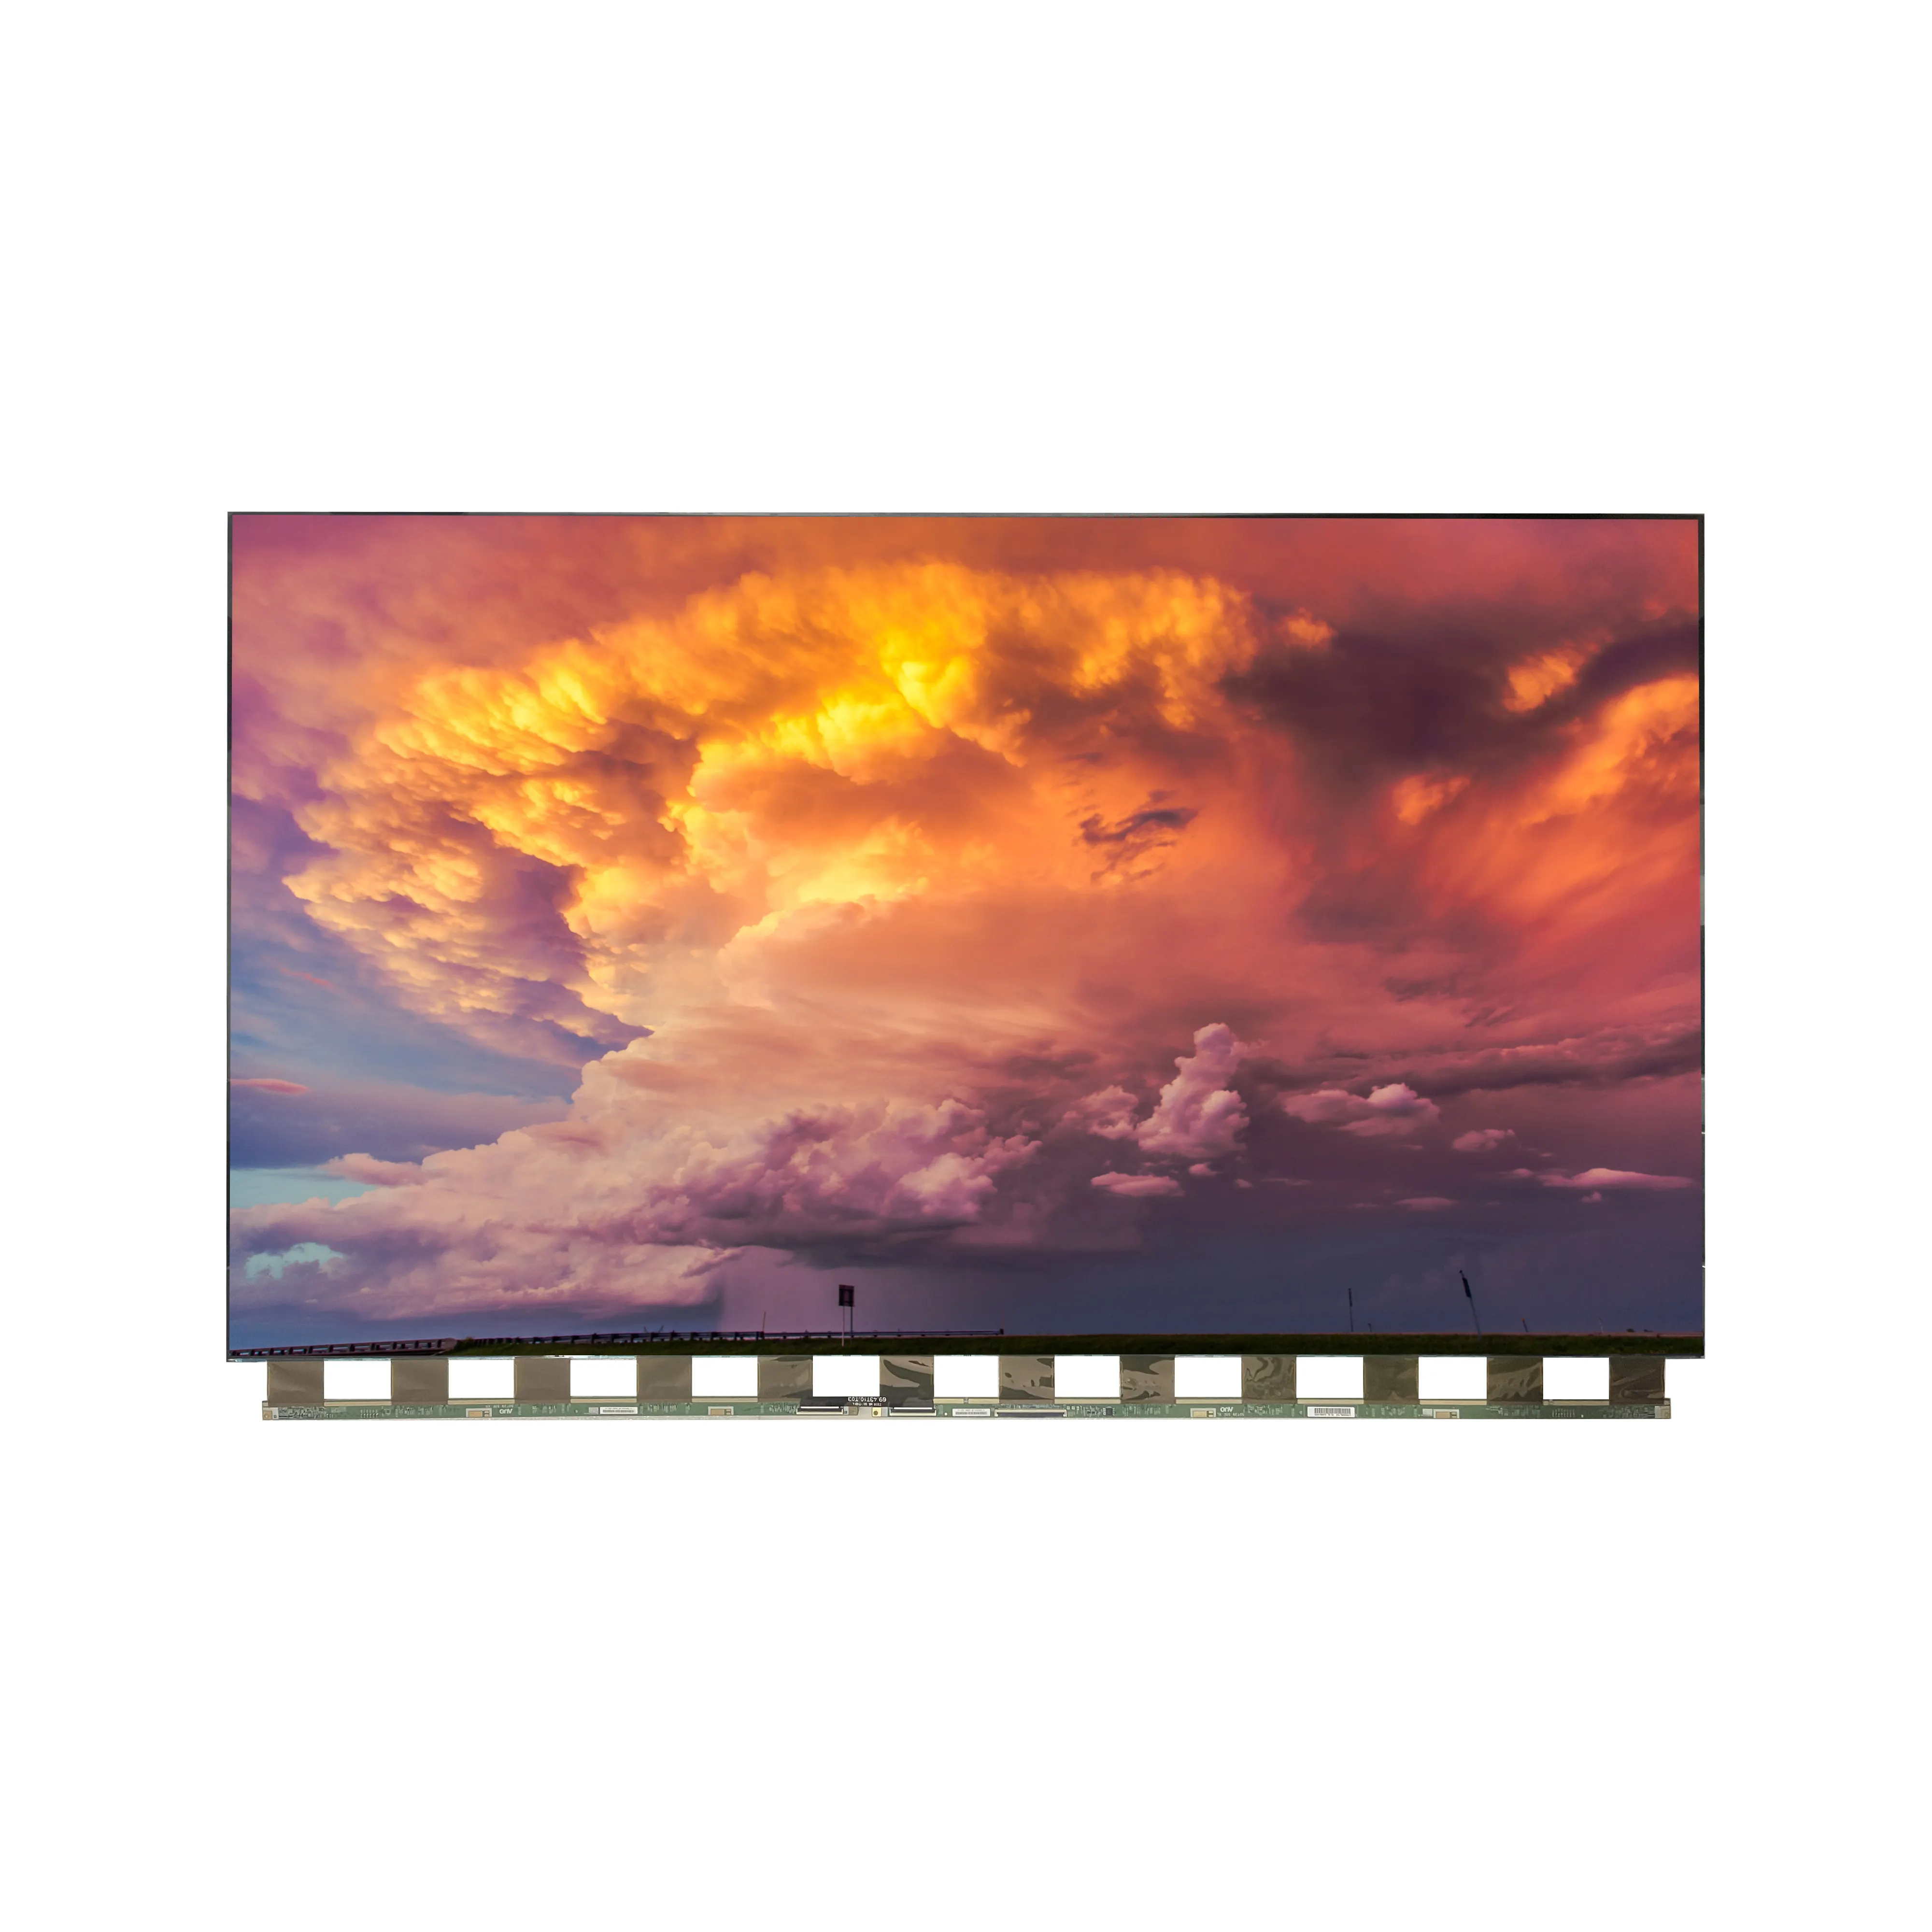 AUOブランド50インチスクリーンパネルT500QVR05.2 4K TVスクリーン修理交換用TV LCDスクリーン工場卸売小売